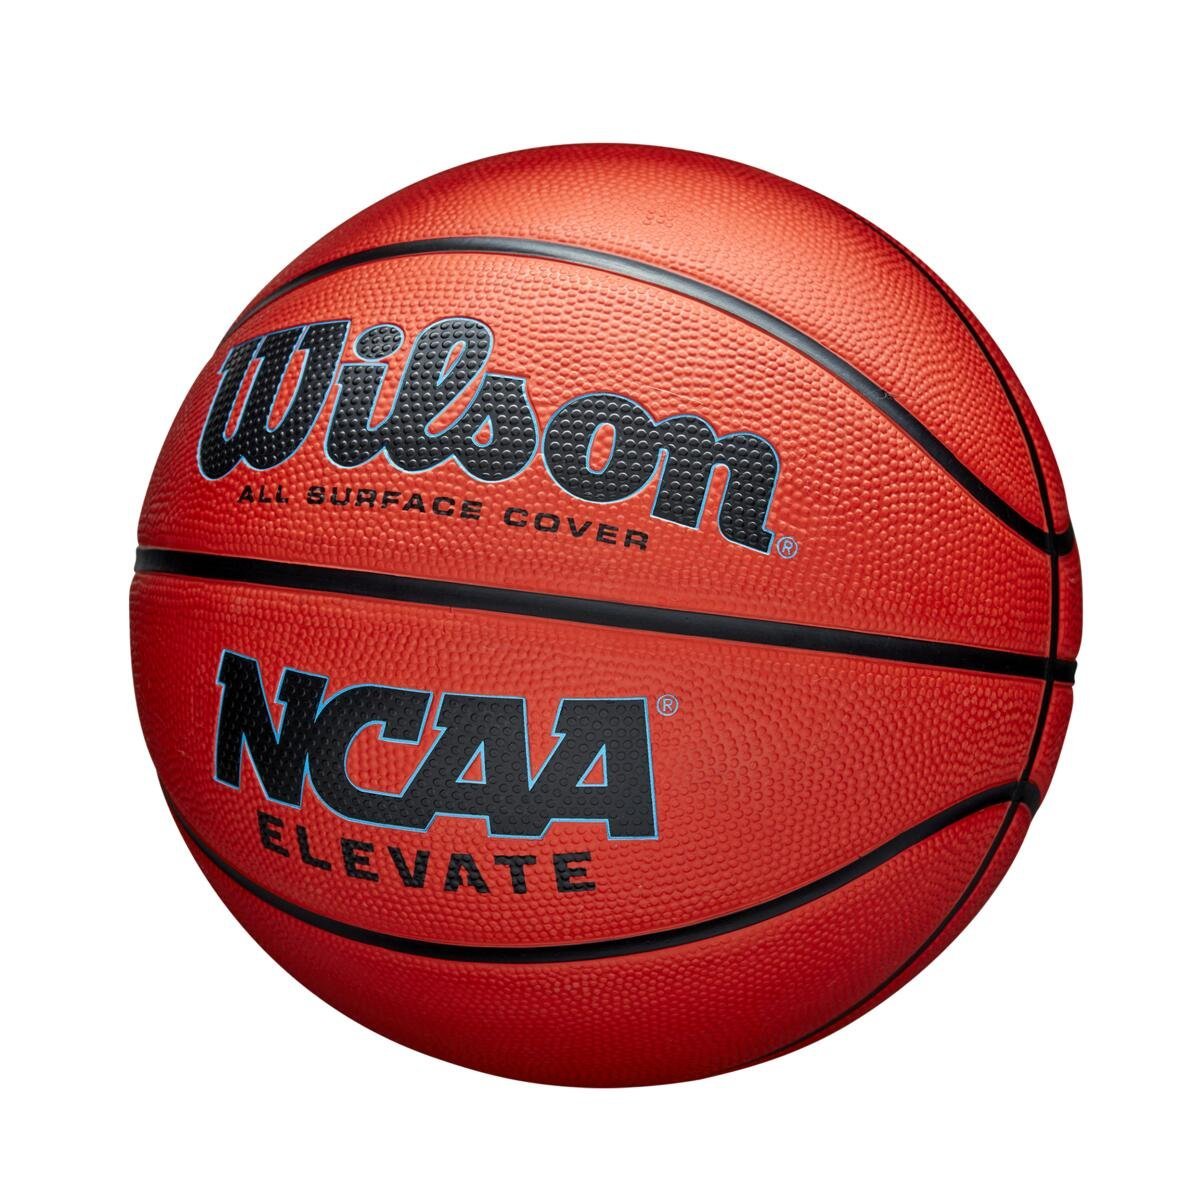 Lopta Wilson NCAA Elevate Bskt - oranžová/čierna